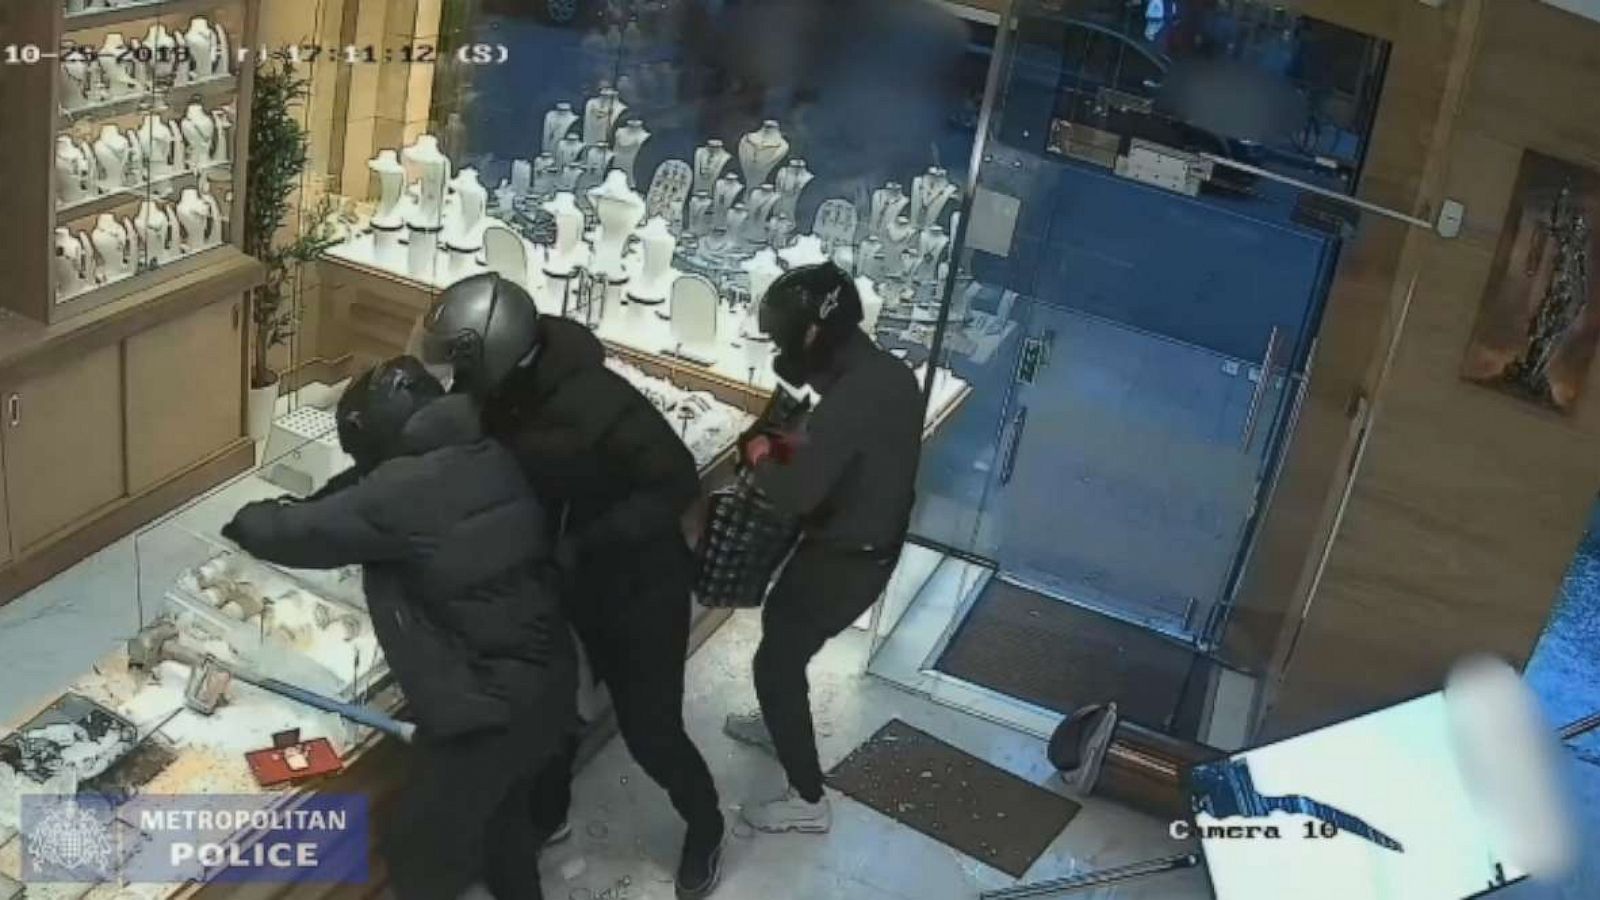 Astonishing video shows daring smash-and-grab raid in London jewelry store  pic